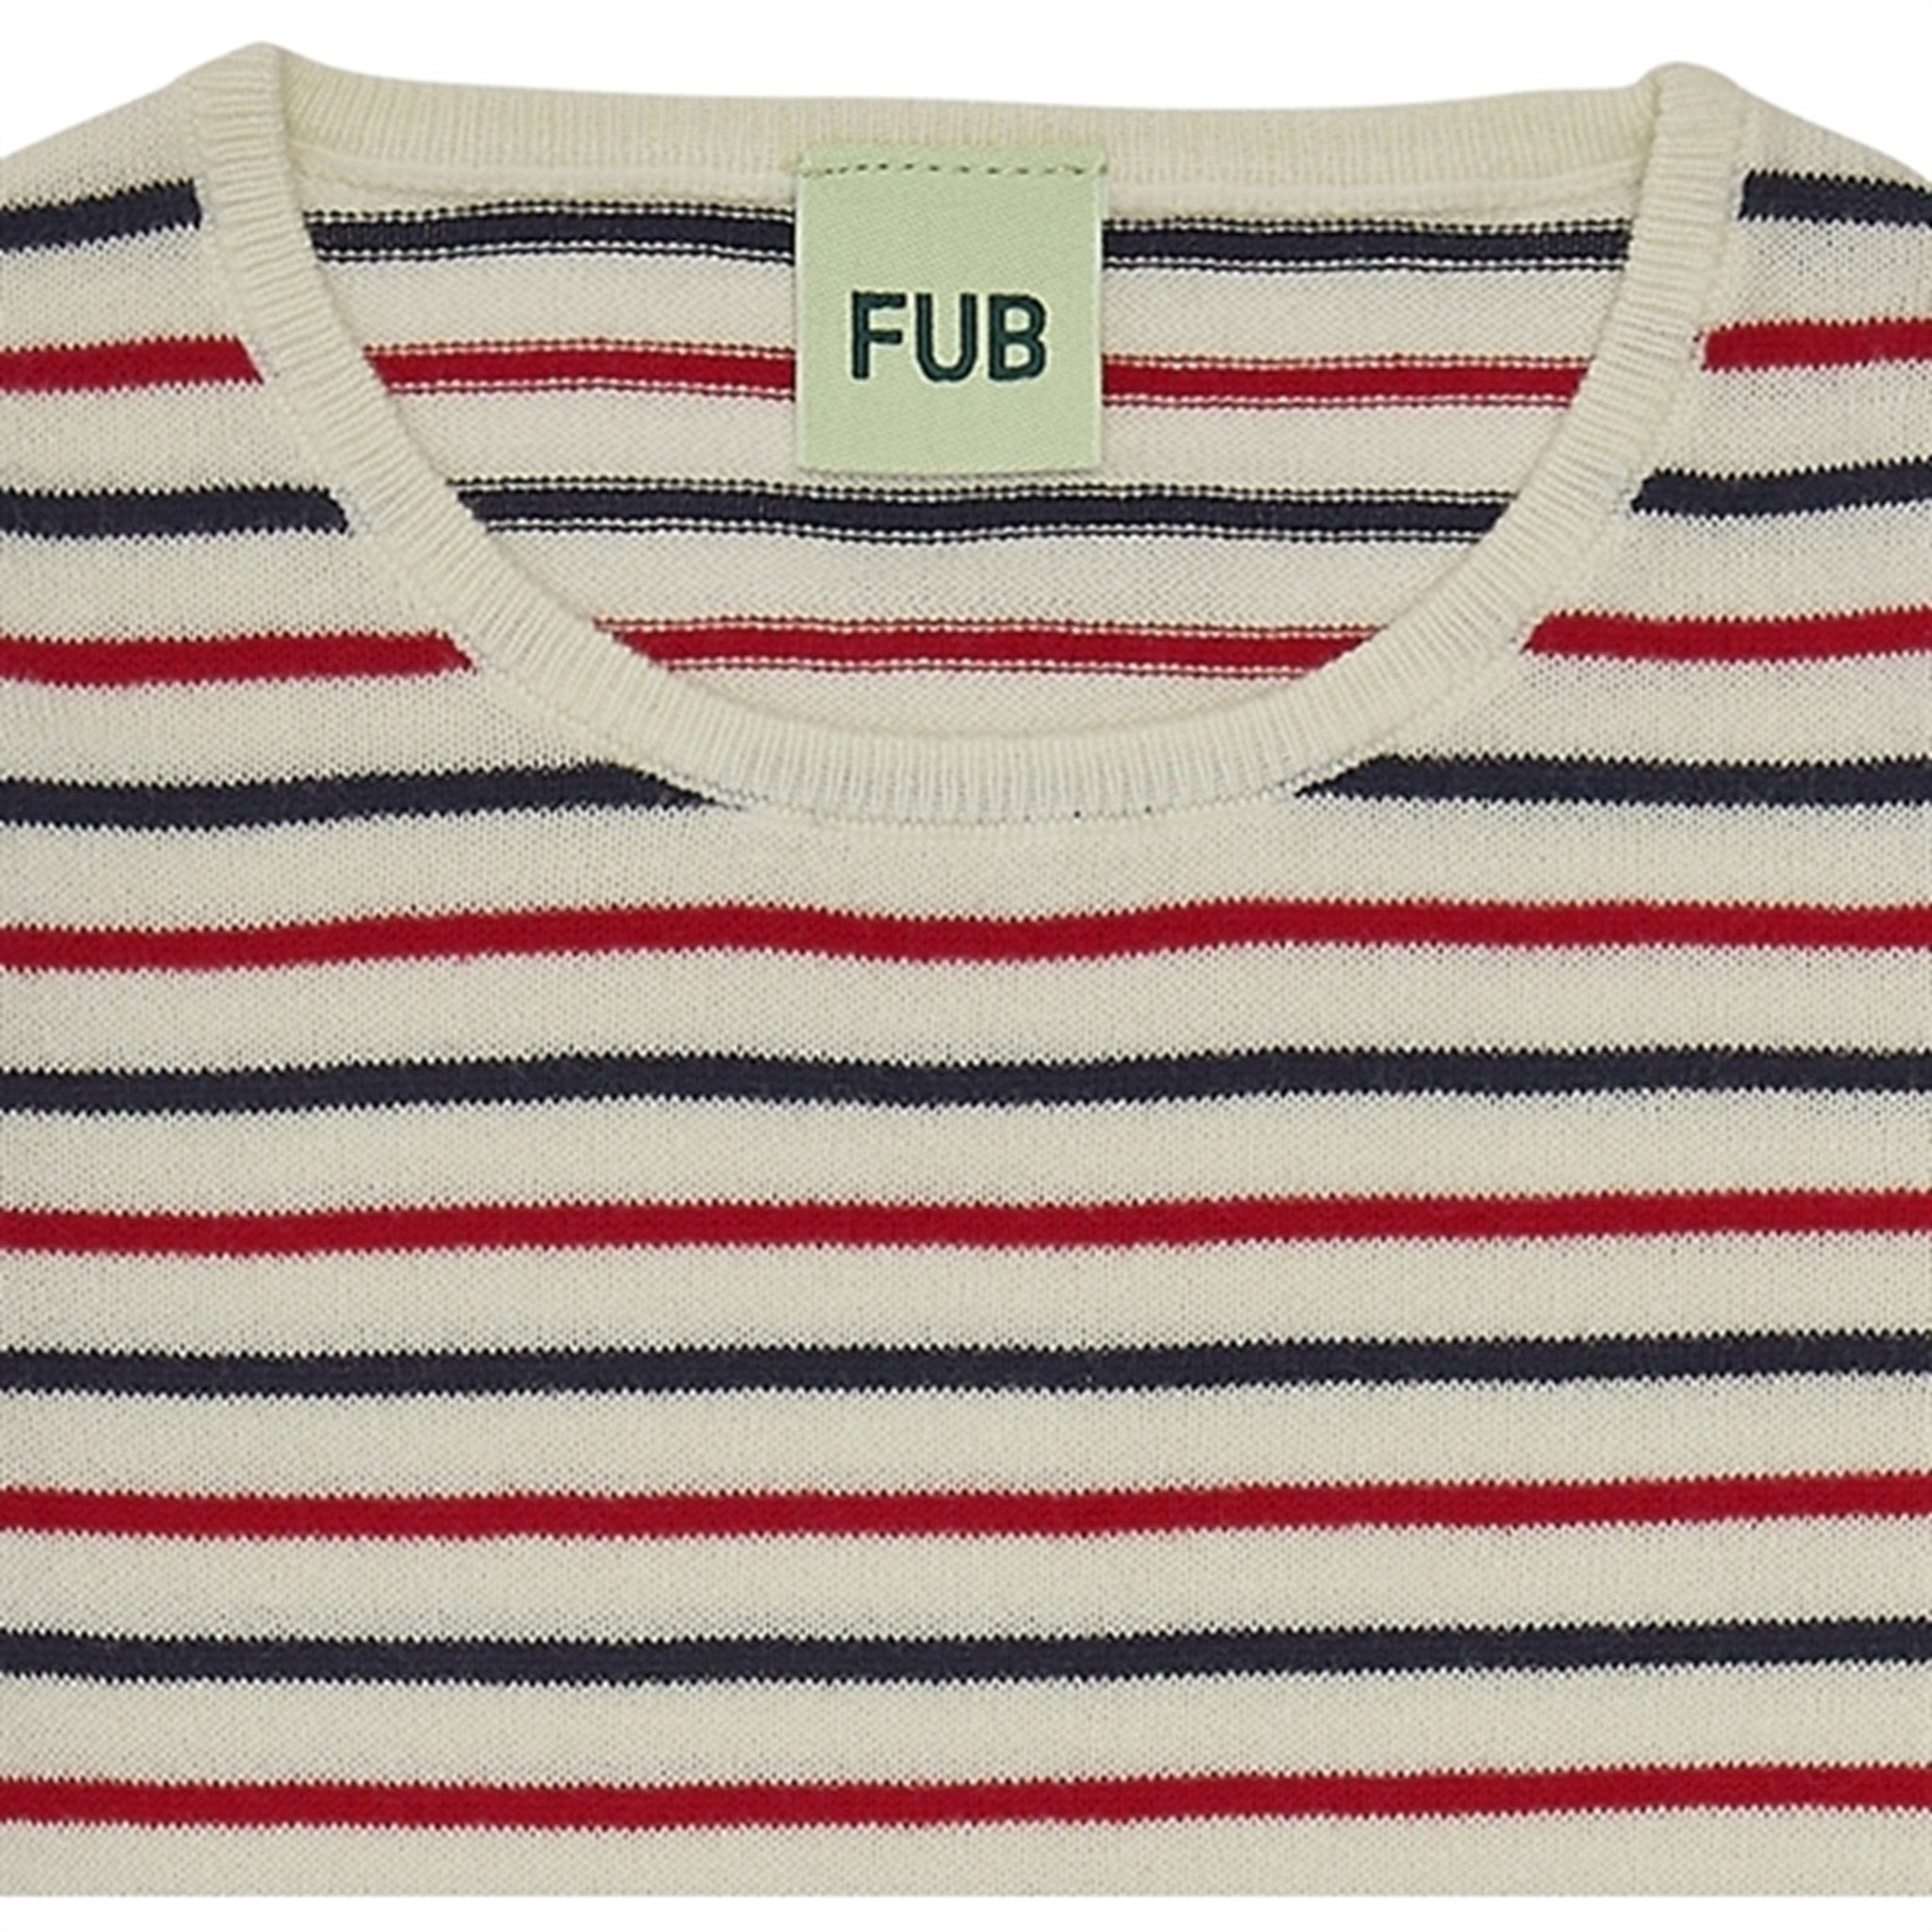 FUB Contrast Striped Bluse Ecru/Dark Navy/Bright Red 2